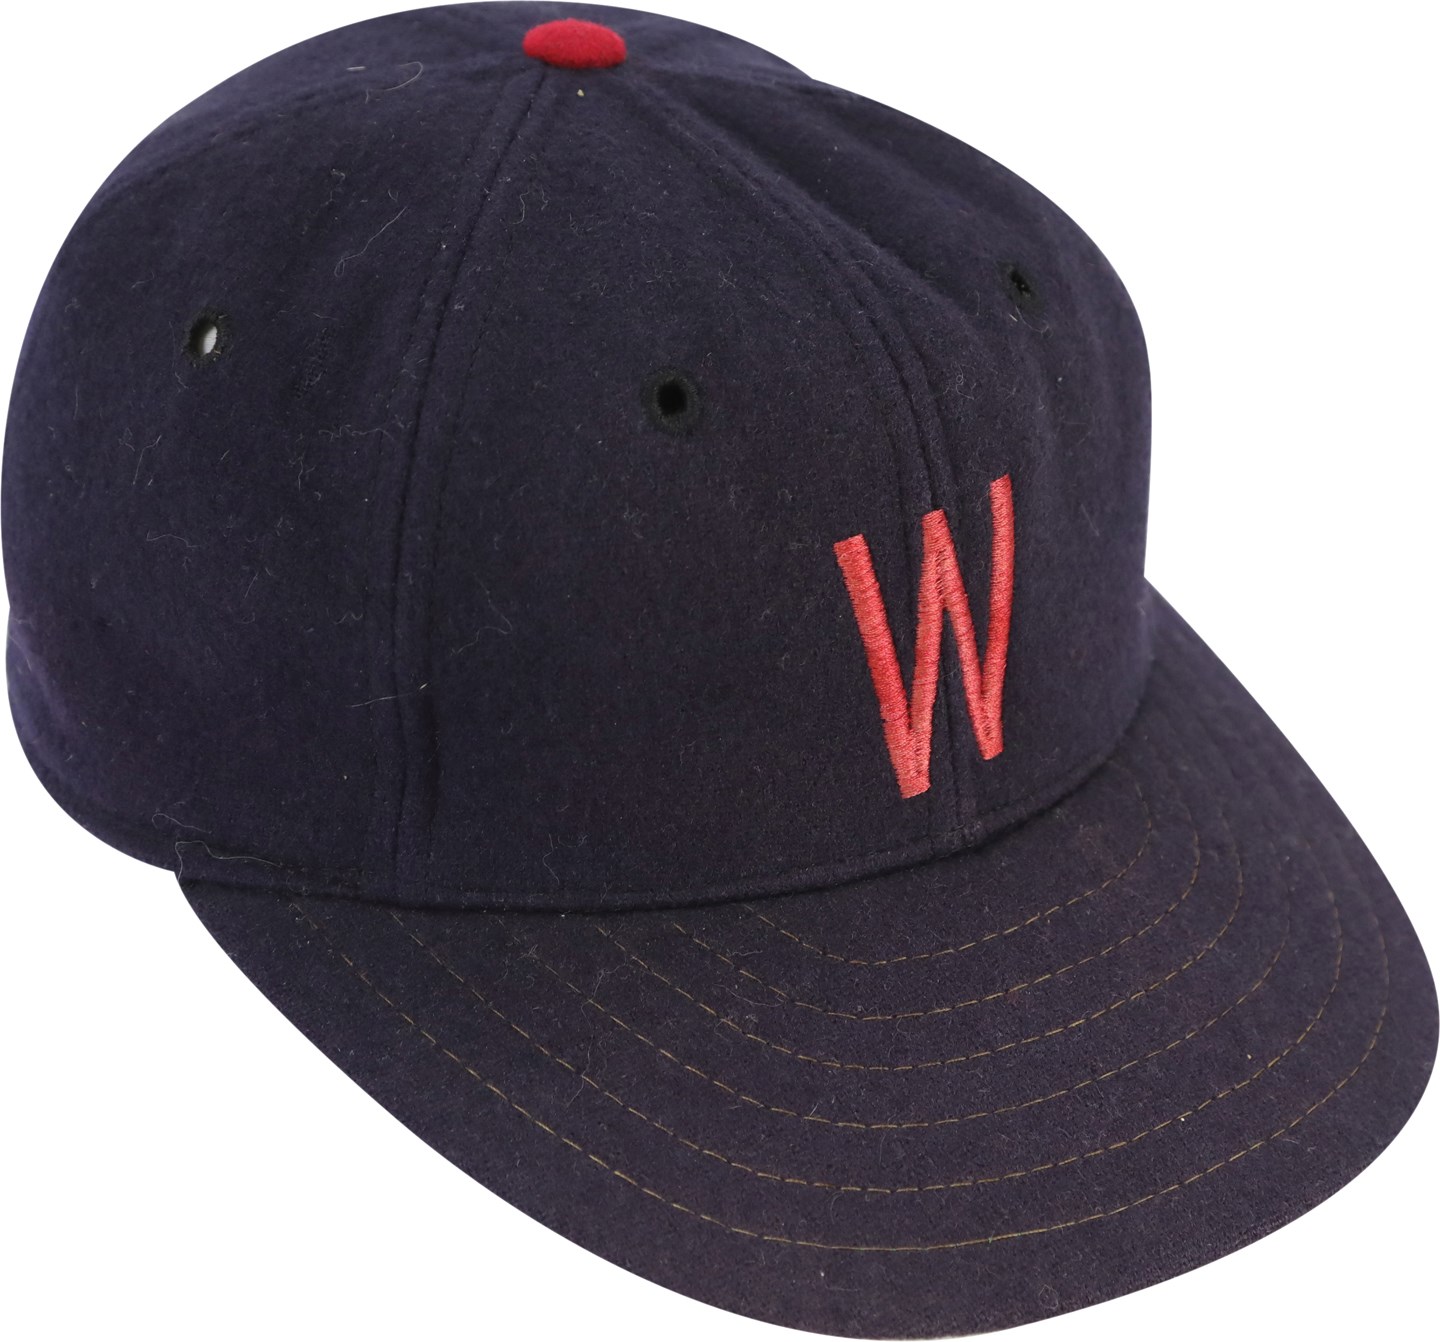 Rare 1950s Washington Senators Game Used Cap